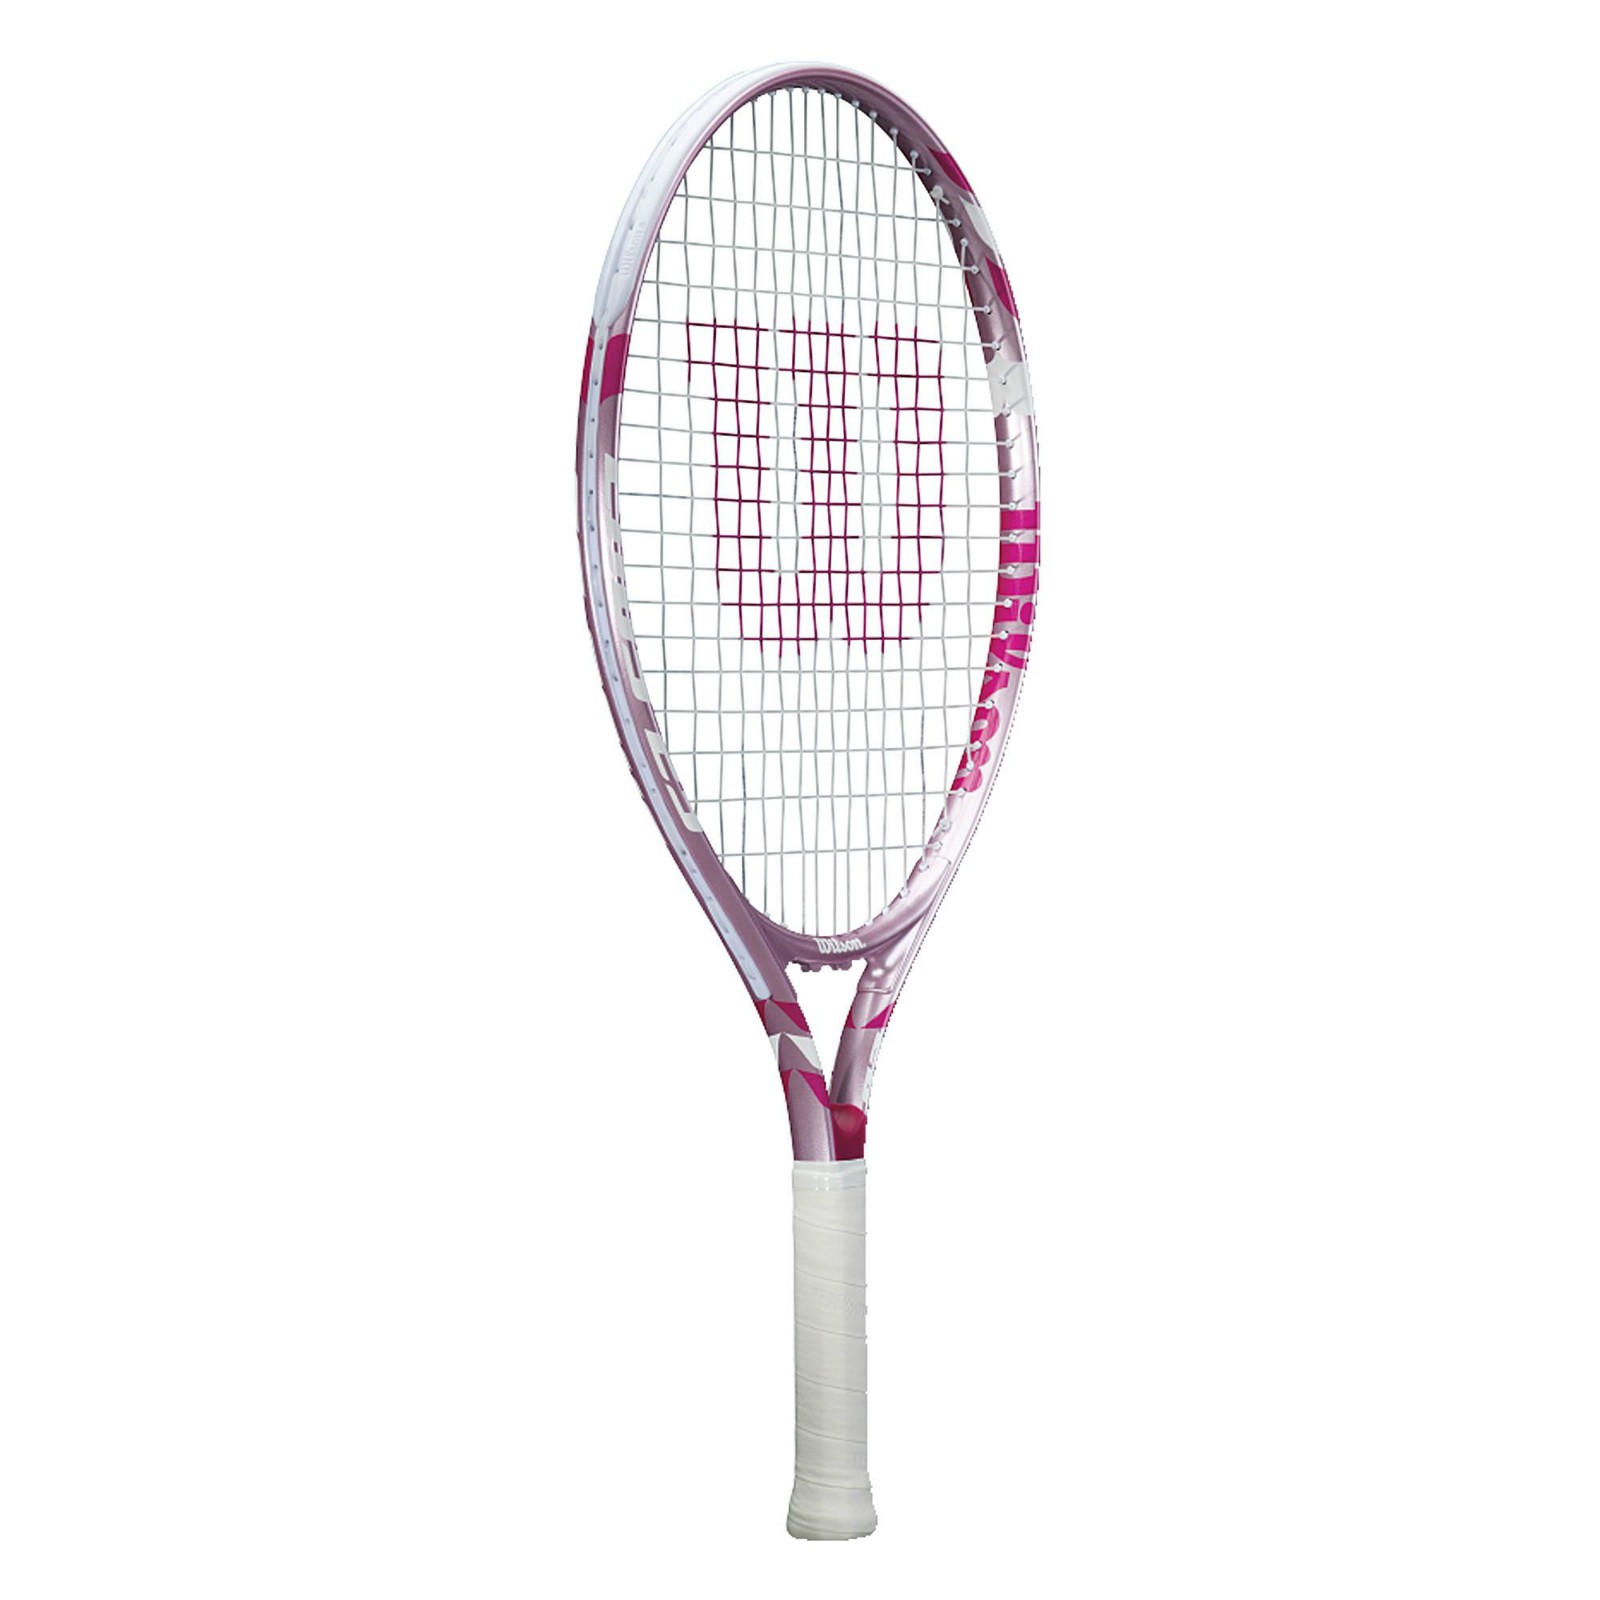 Dětská tenisová raketa Wilson Envy 23 pink